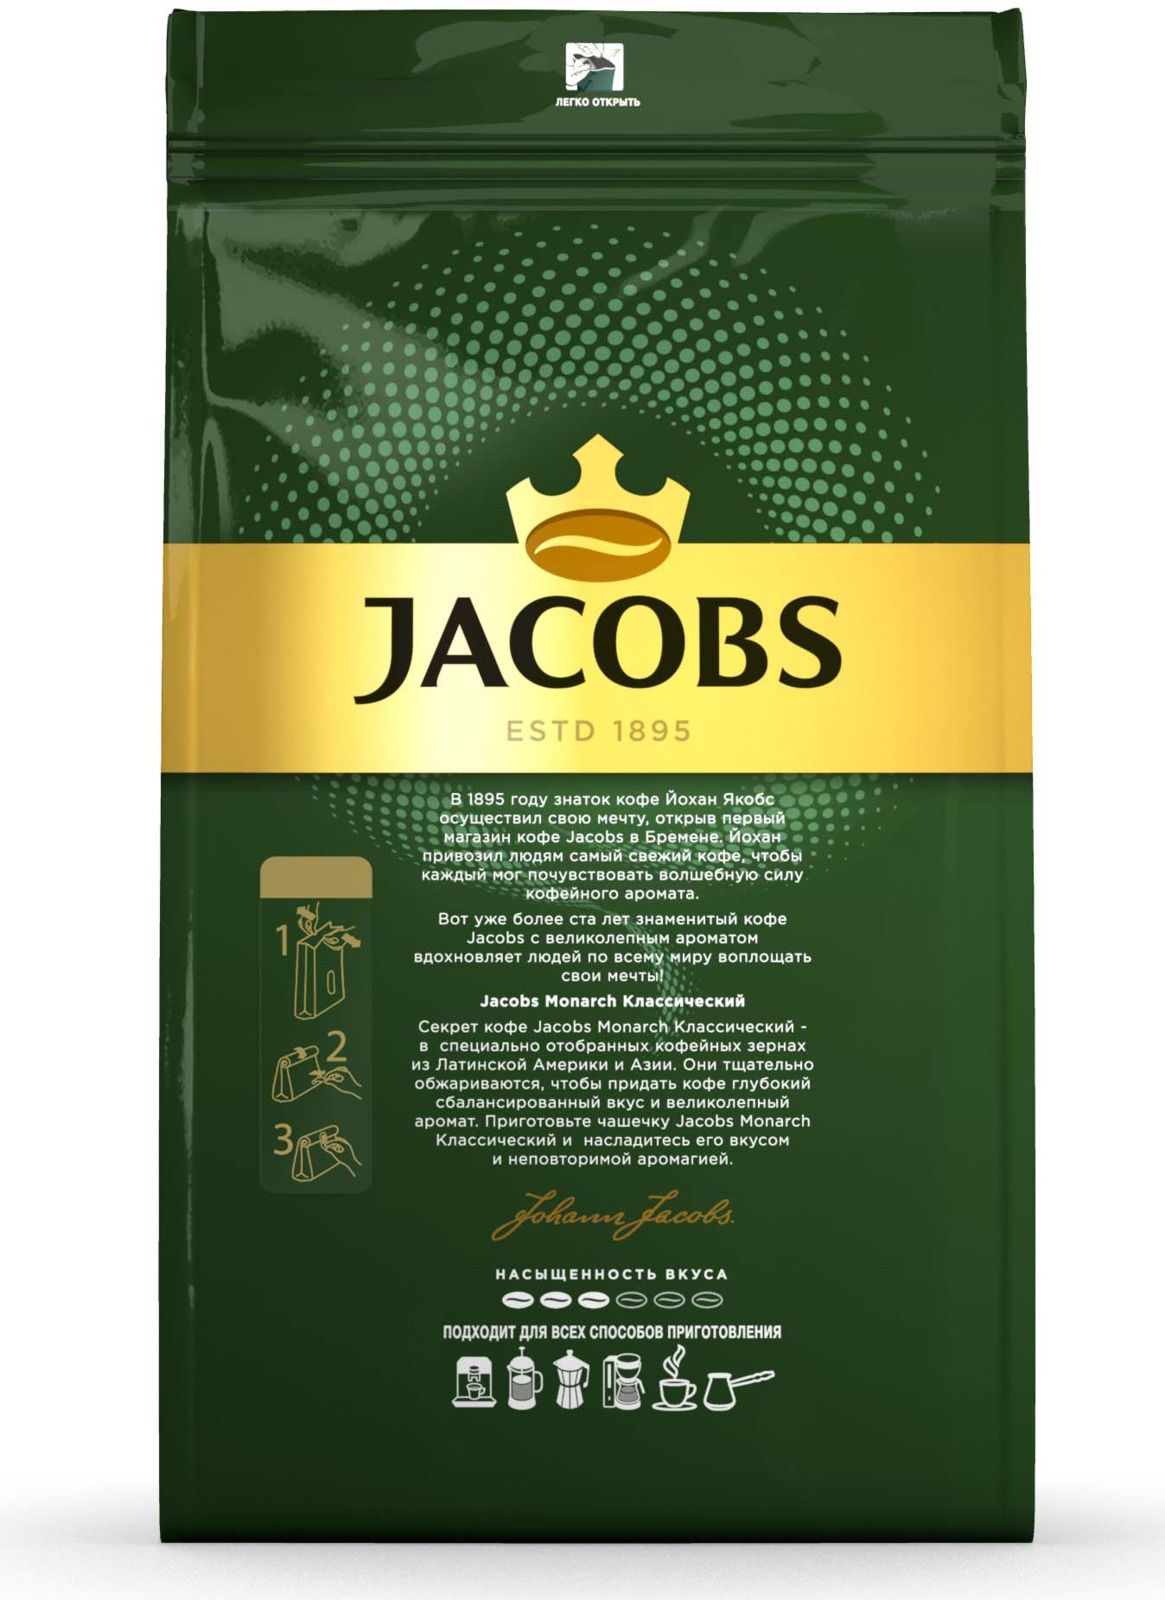 Jacobs Monarch   , 430 